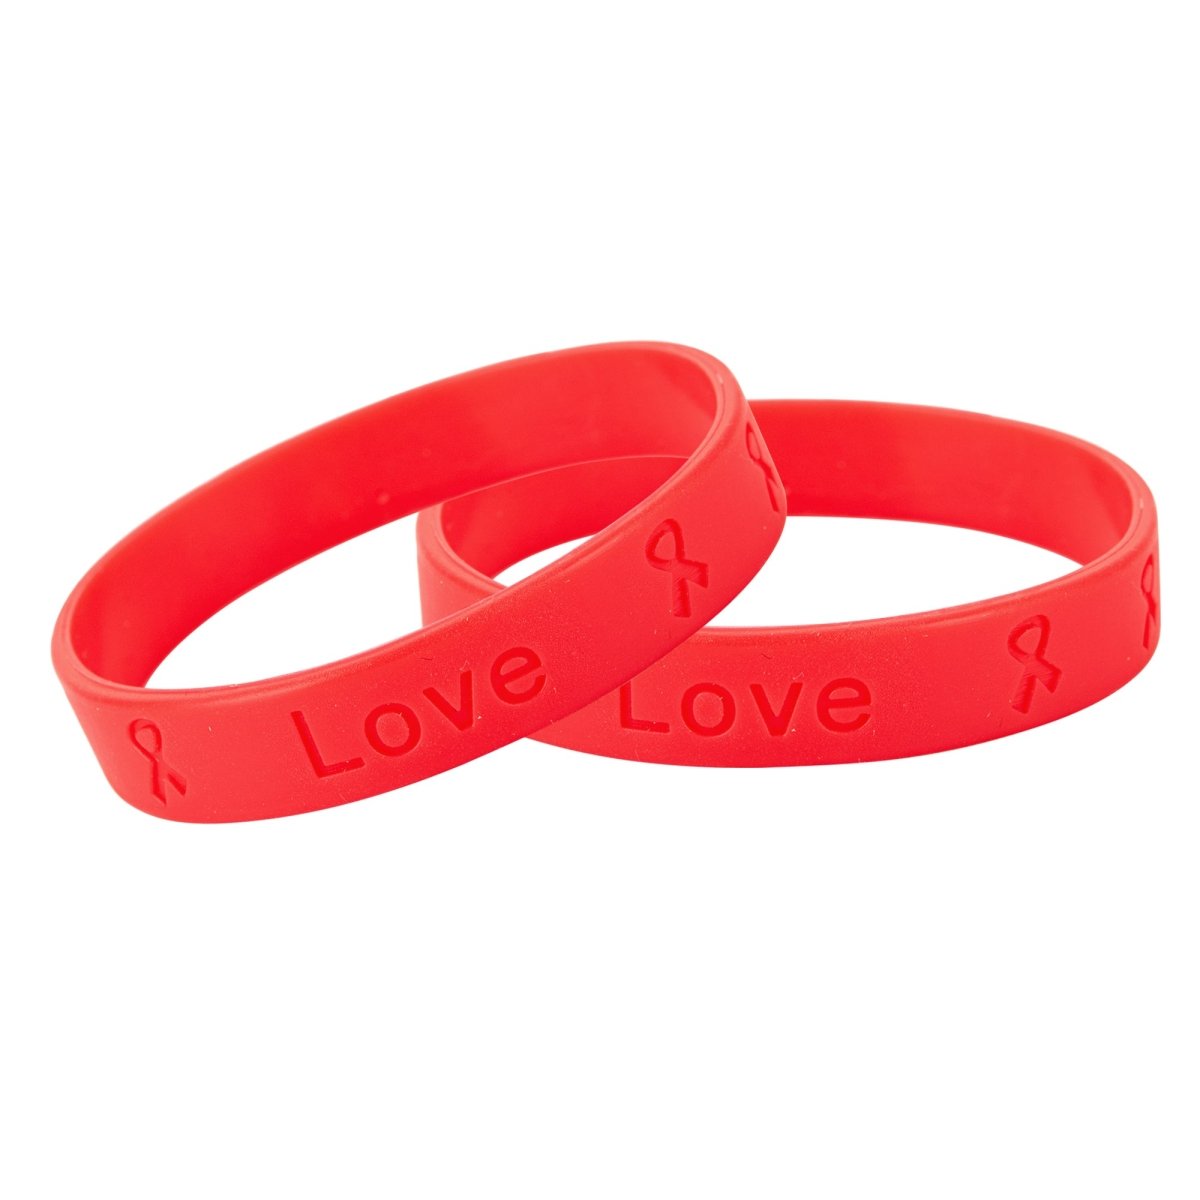 Hemophilia Awareness Red Awareness Silicone Bracelet Wristbands - Fundraising For A Cause